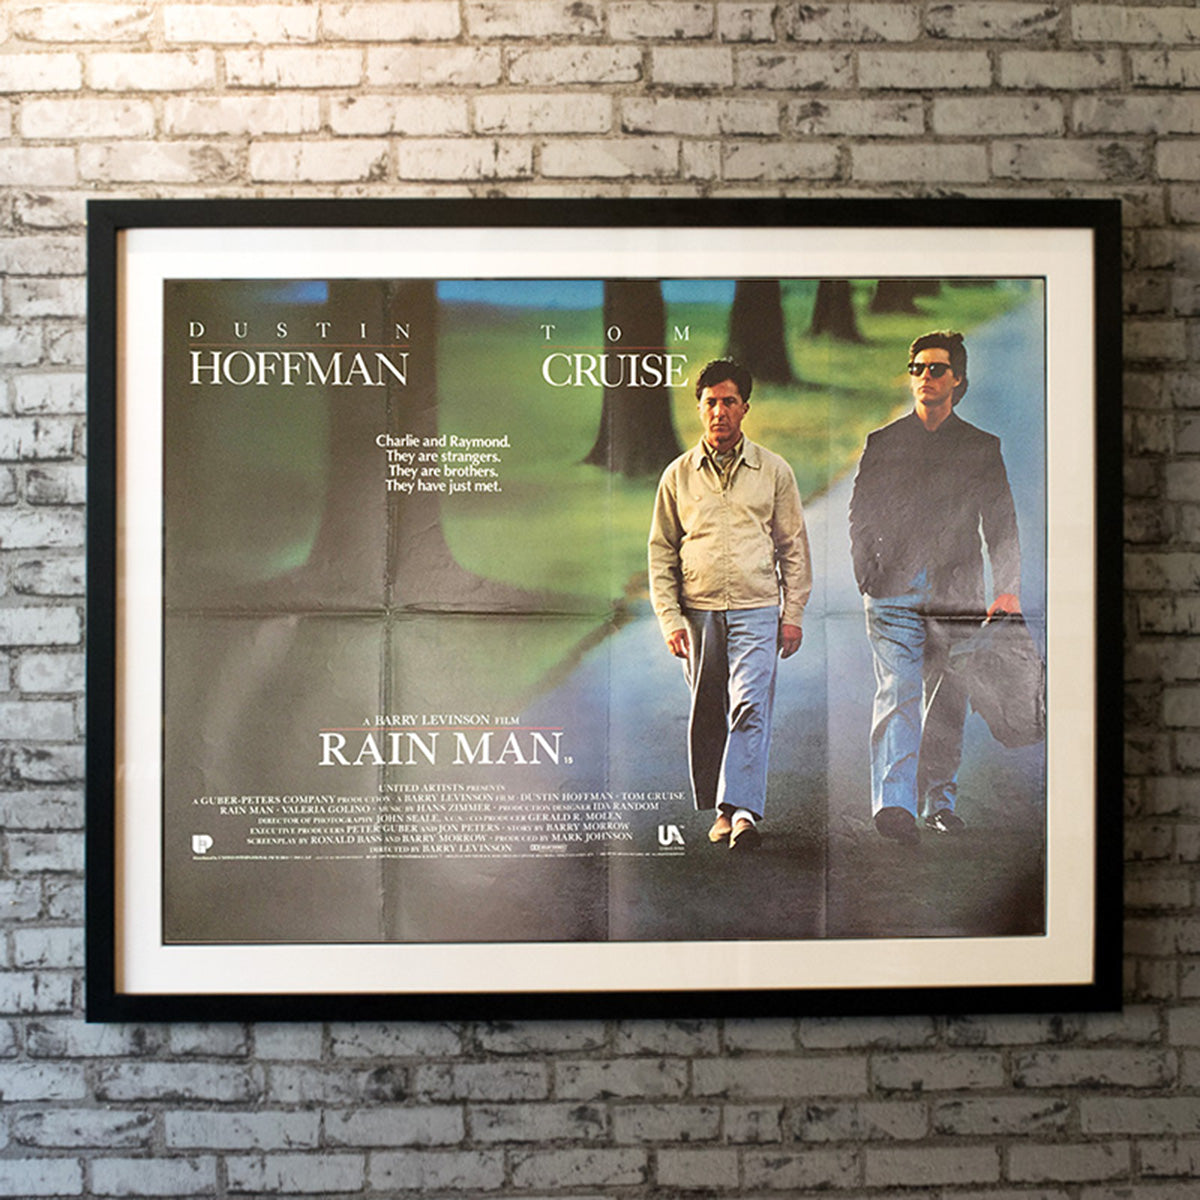 Original Movie Poster of Rain Man (1988)